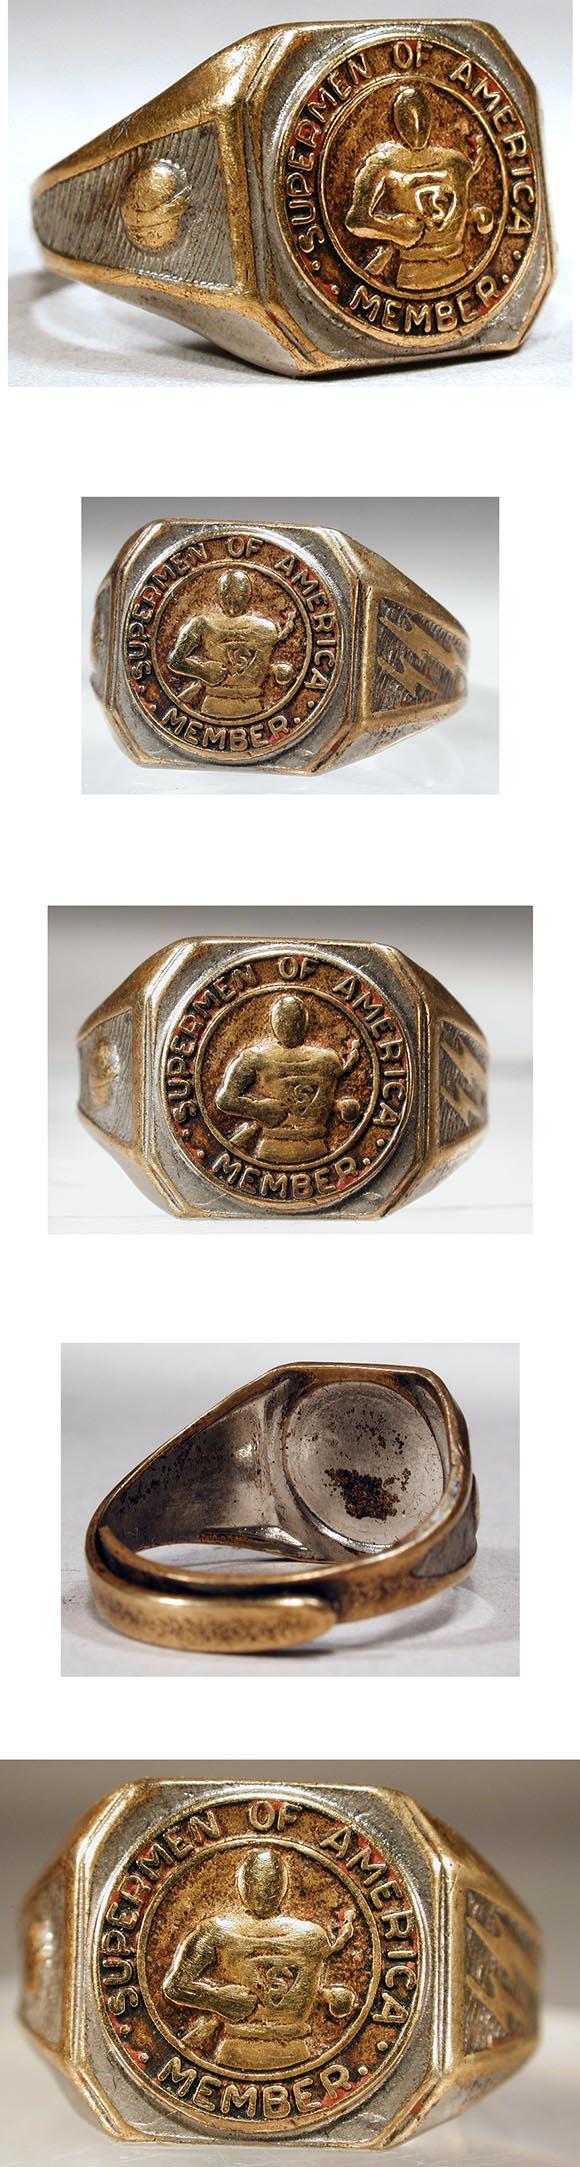 1940 Supermen of America Contest Prize Ring